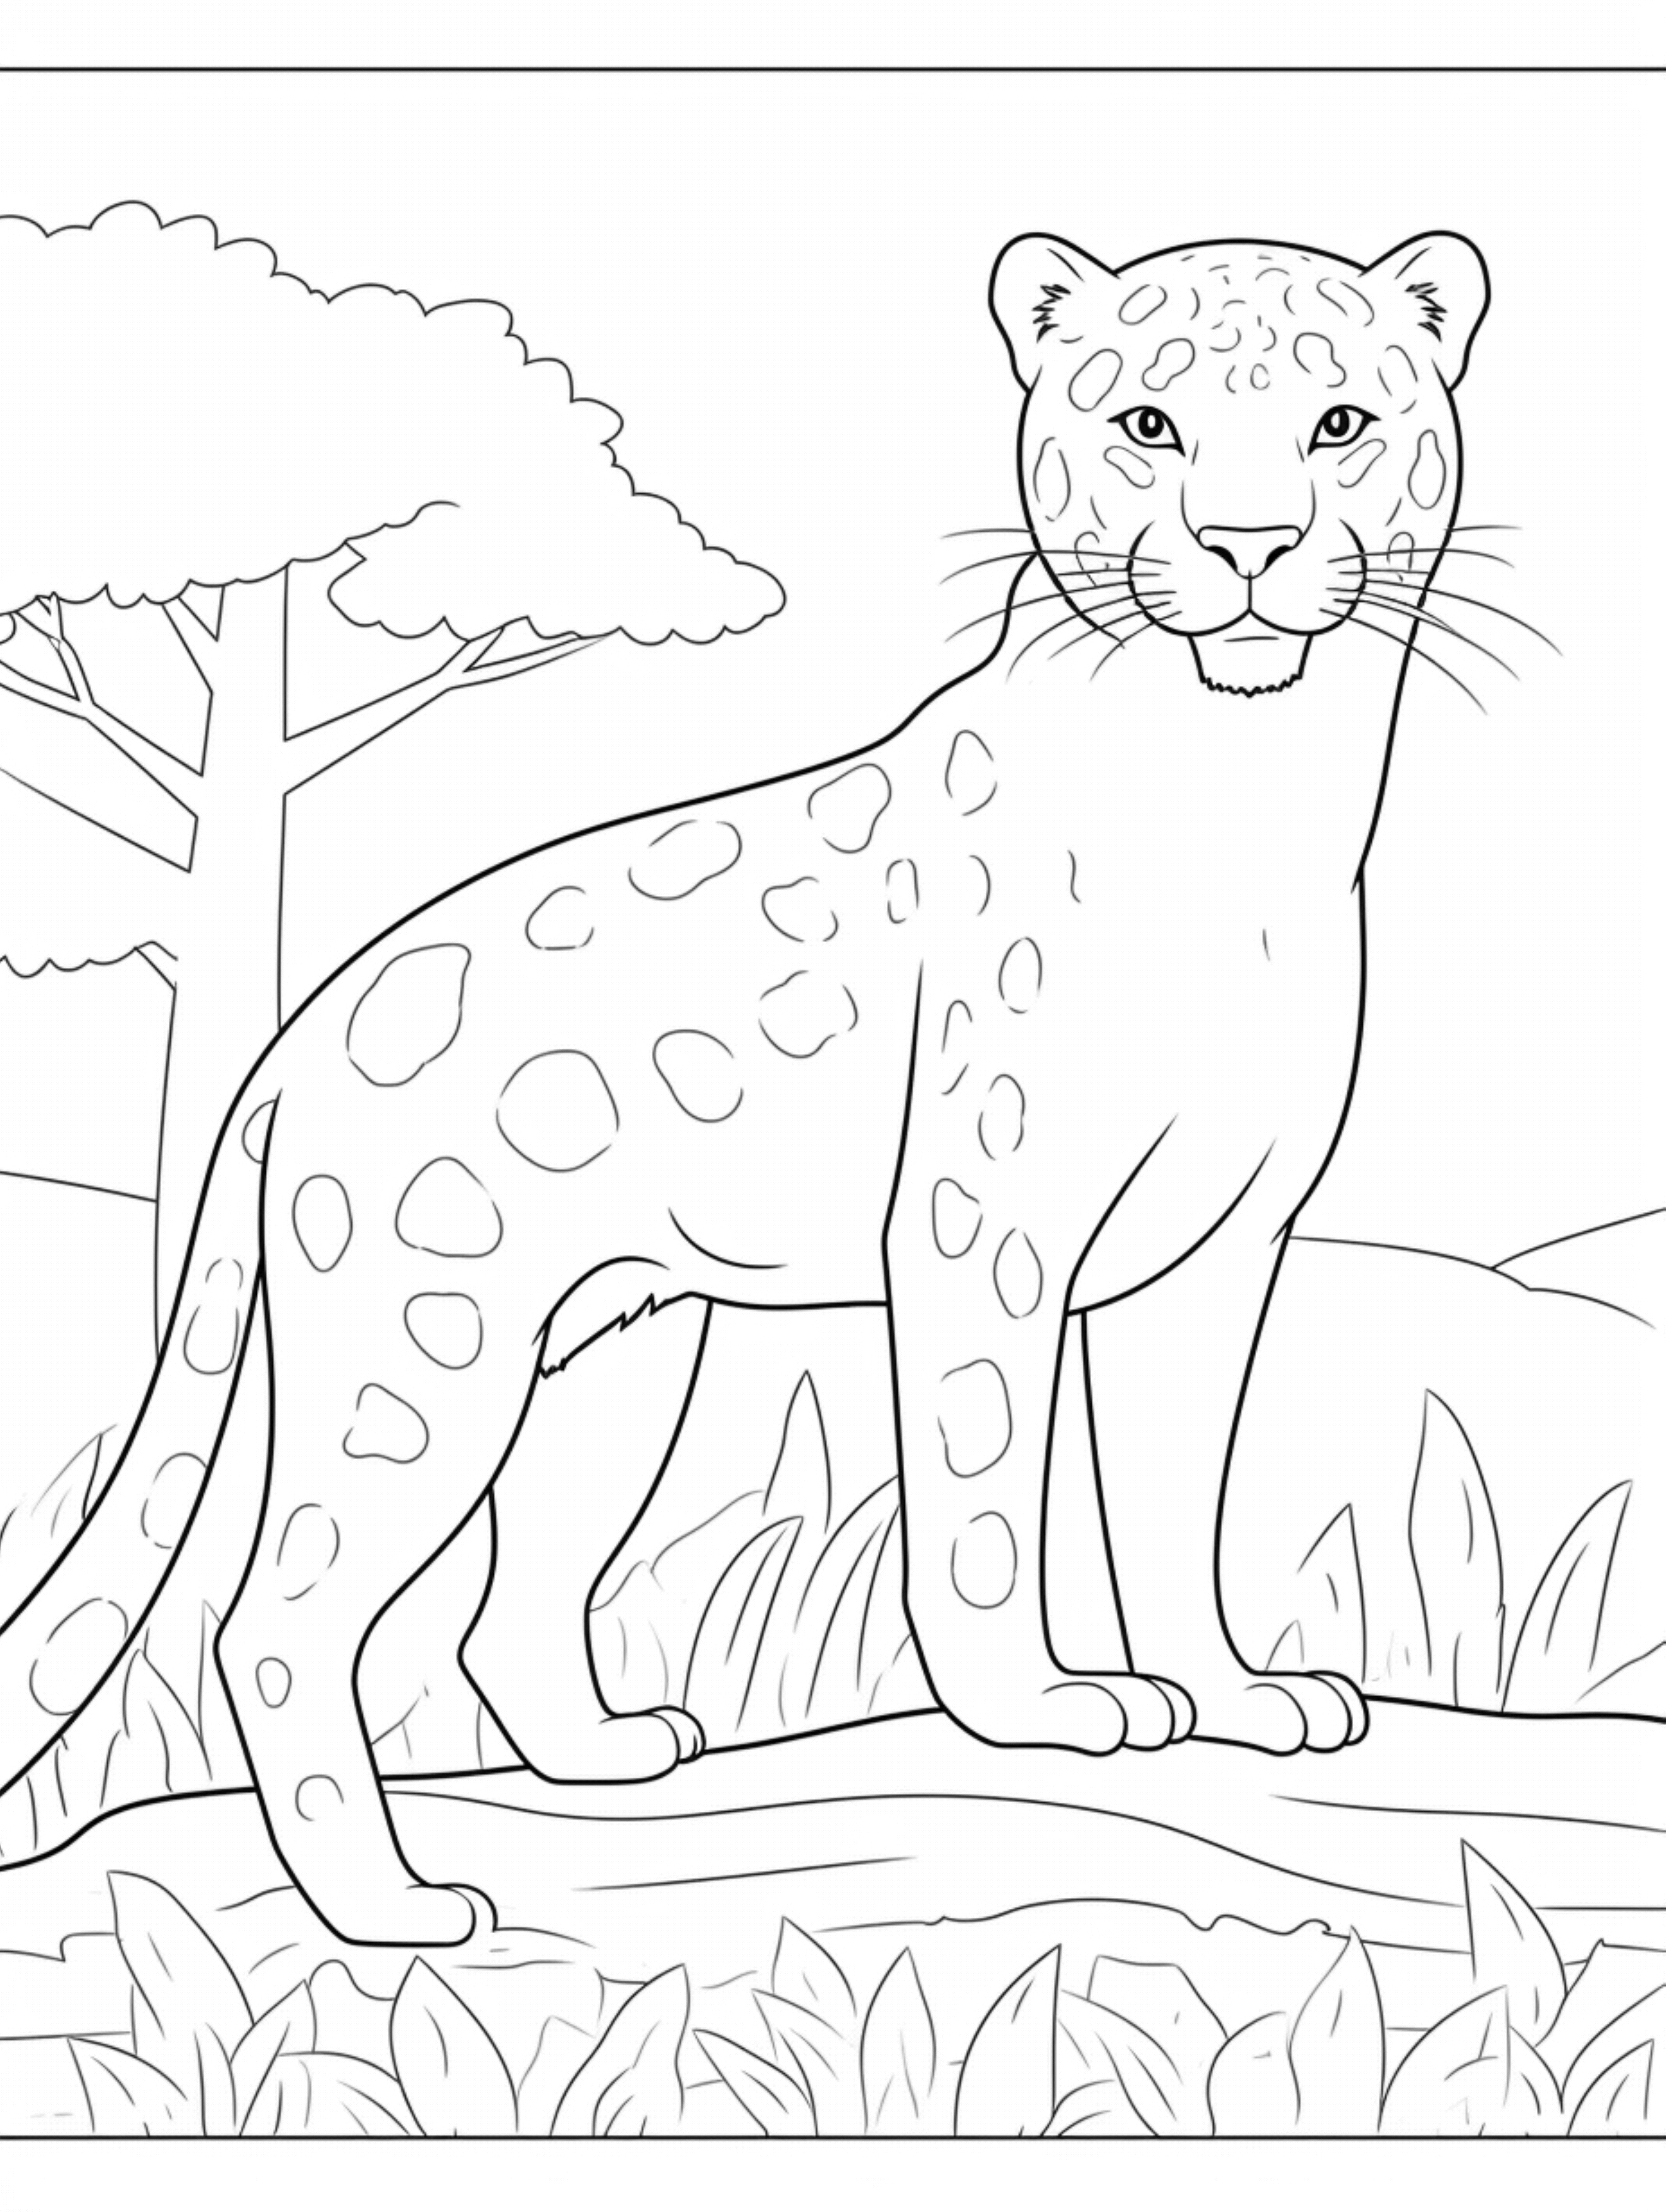 01 cute jaguar in its habitat coloring page for kids